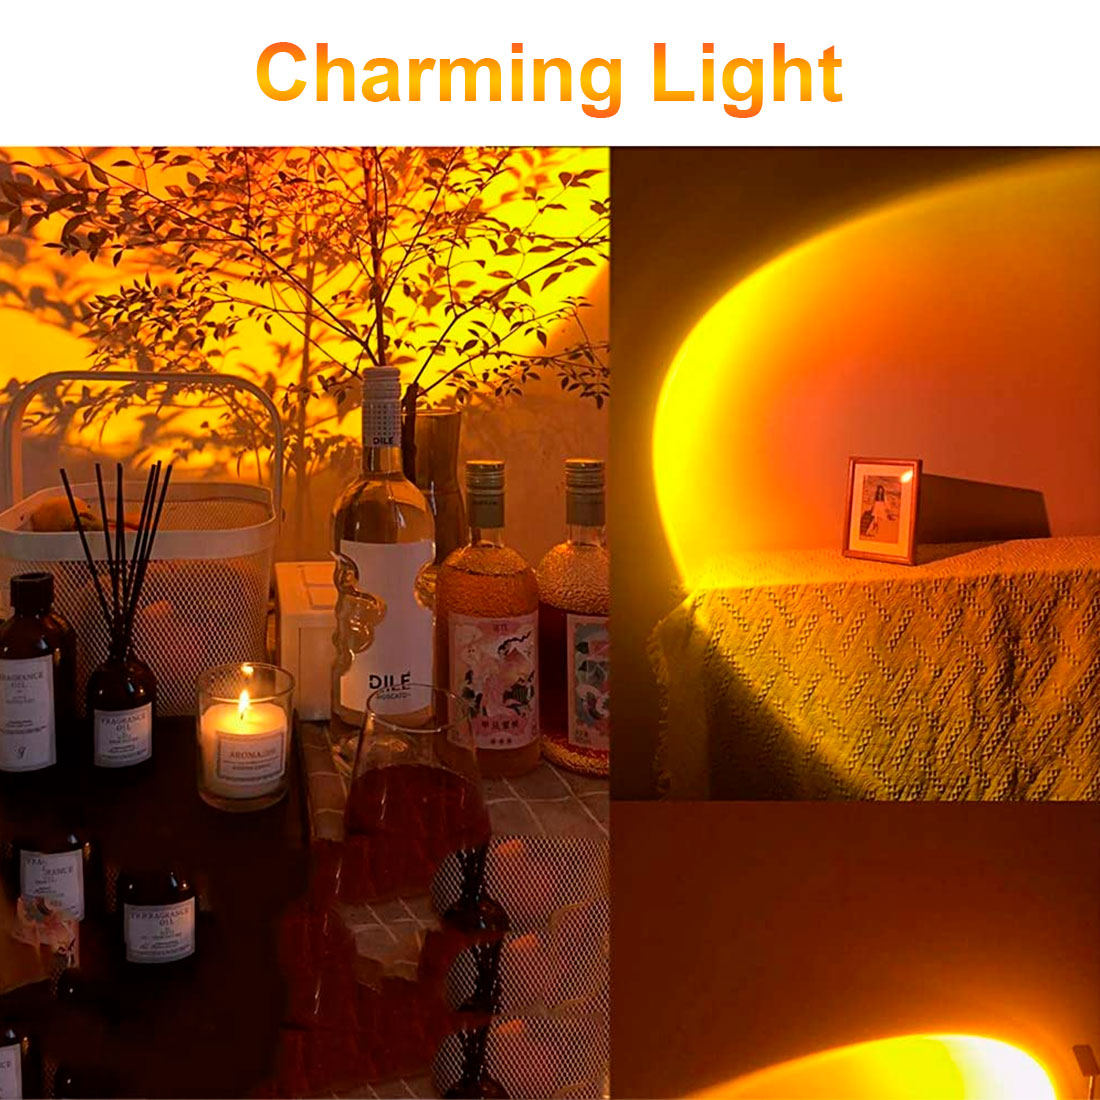 USB-Sunset-Projection-Lamp-Aesthetic-Table-Lamp-Anti-glare-LED-Night-Light-Romantic-Visual-Experienc-1822954-5